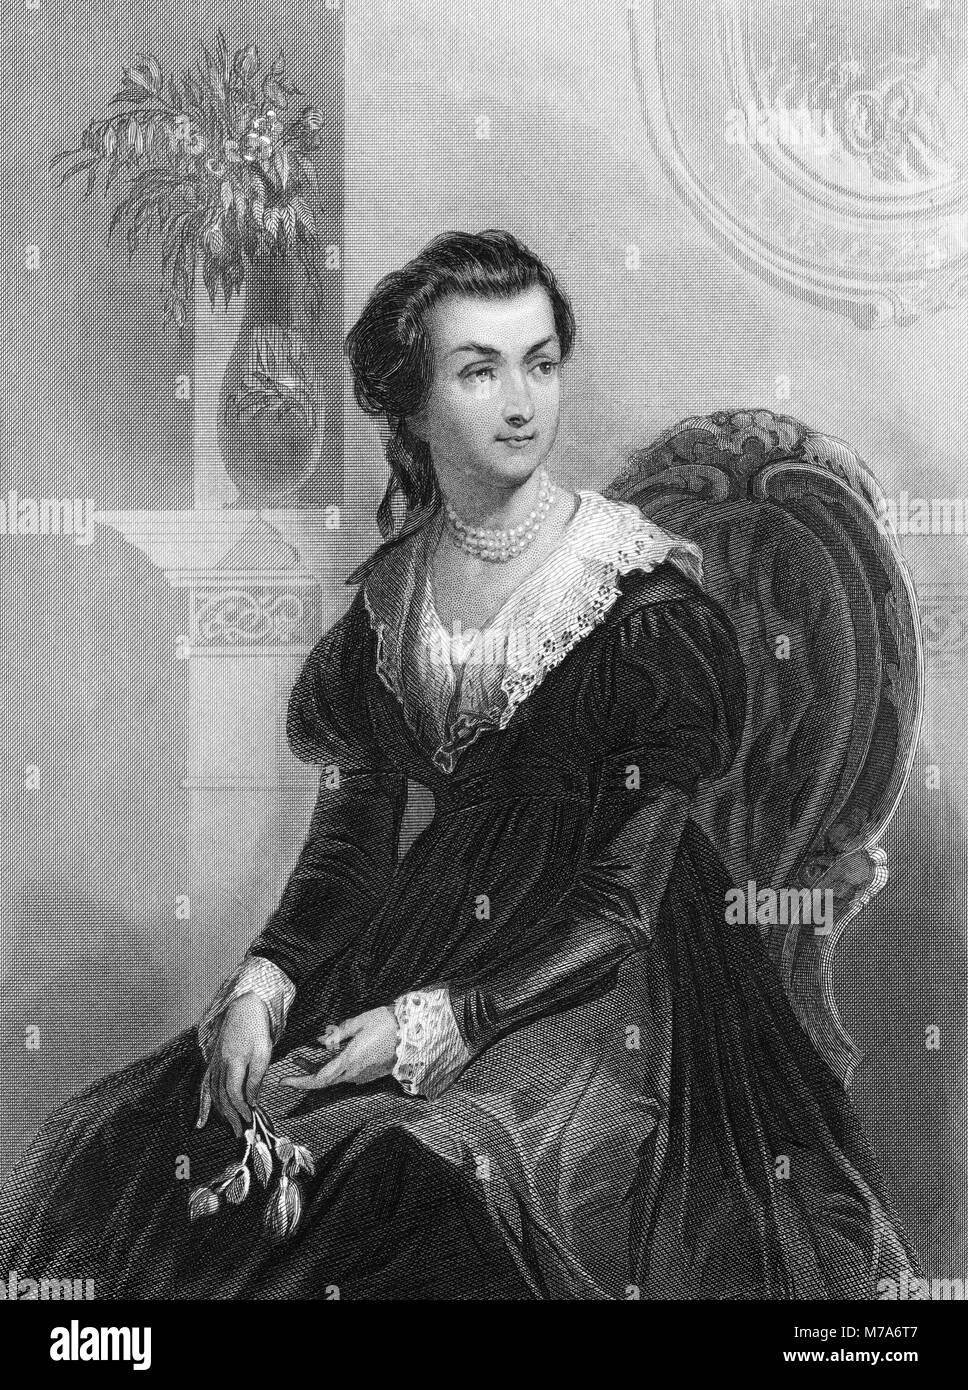 Abigail Adams (geborene Smith: 1744-1818), Frau des 2. US-Präsident John Adams. Gravur von Christian Schussele, 1856. Stockfoto